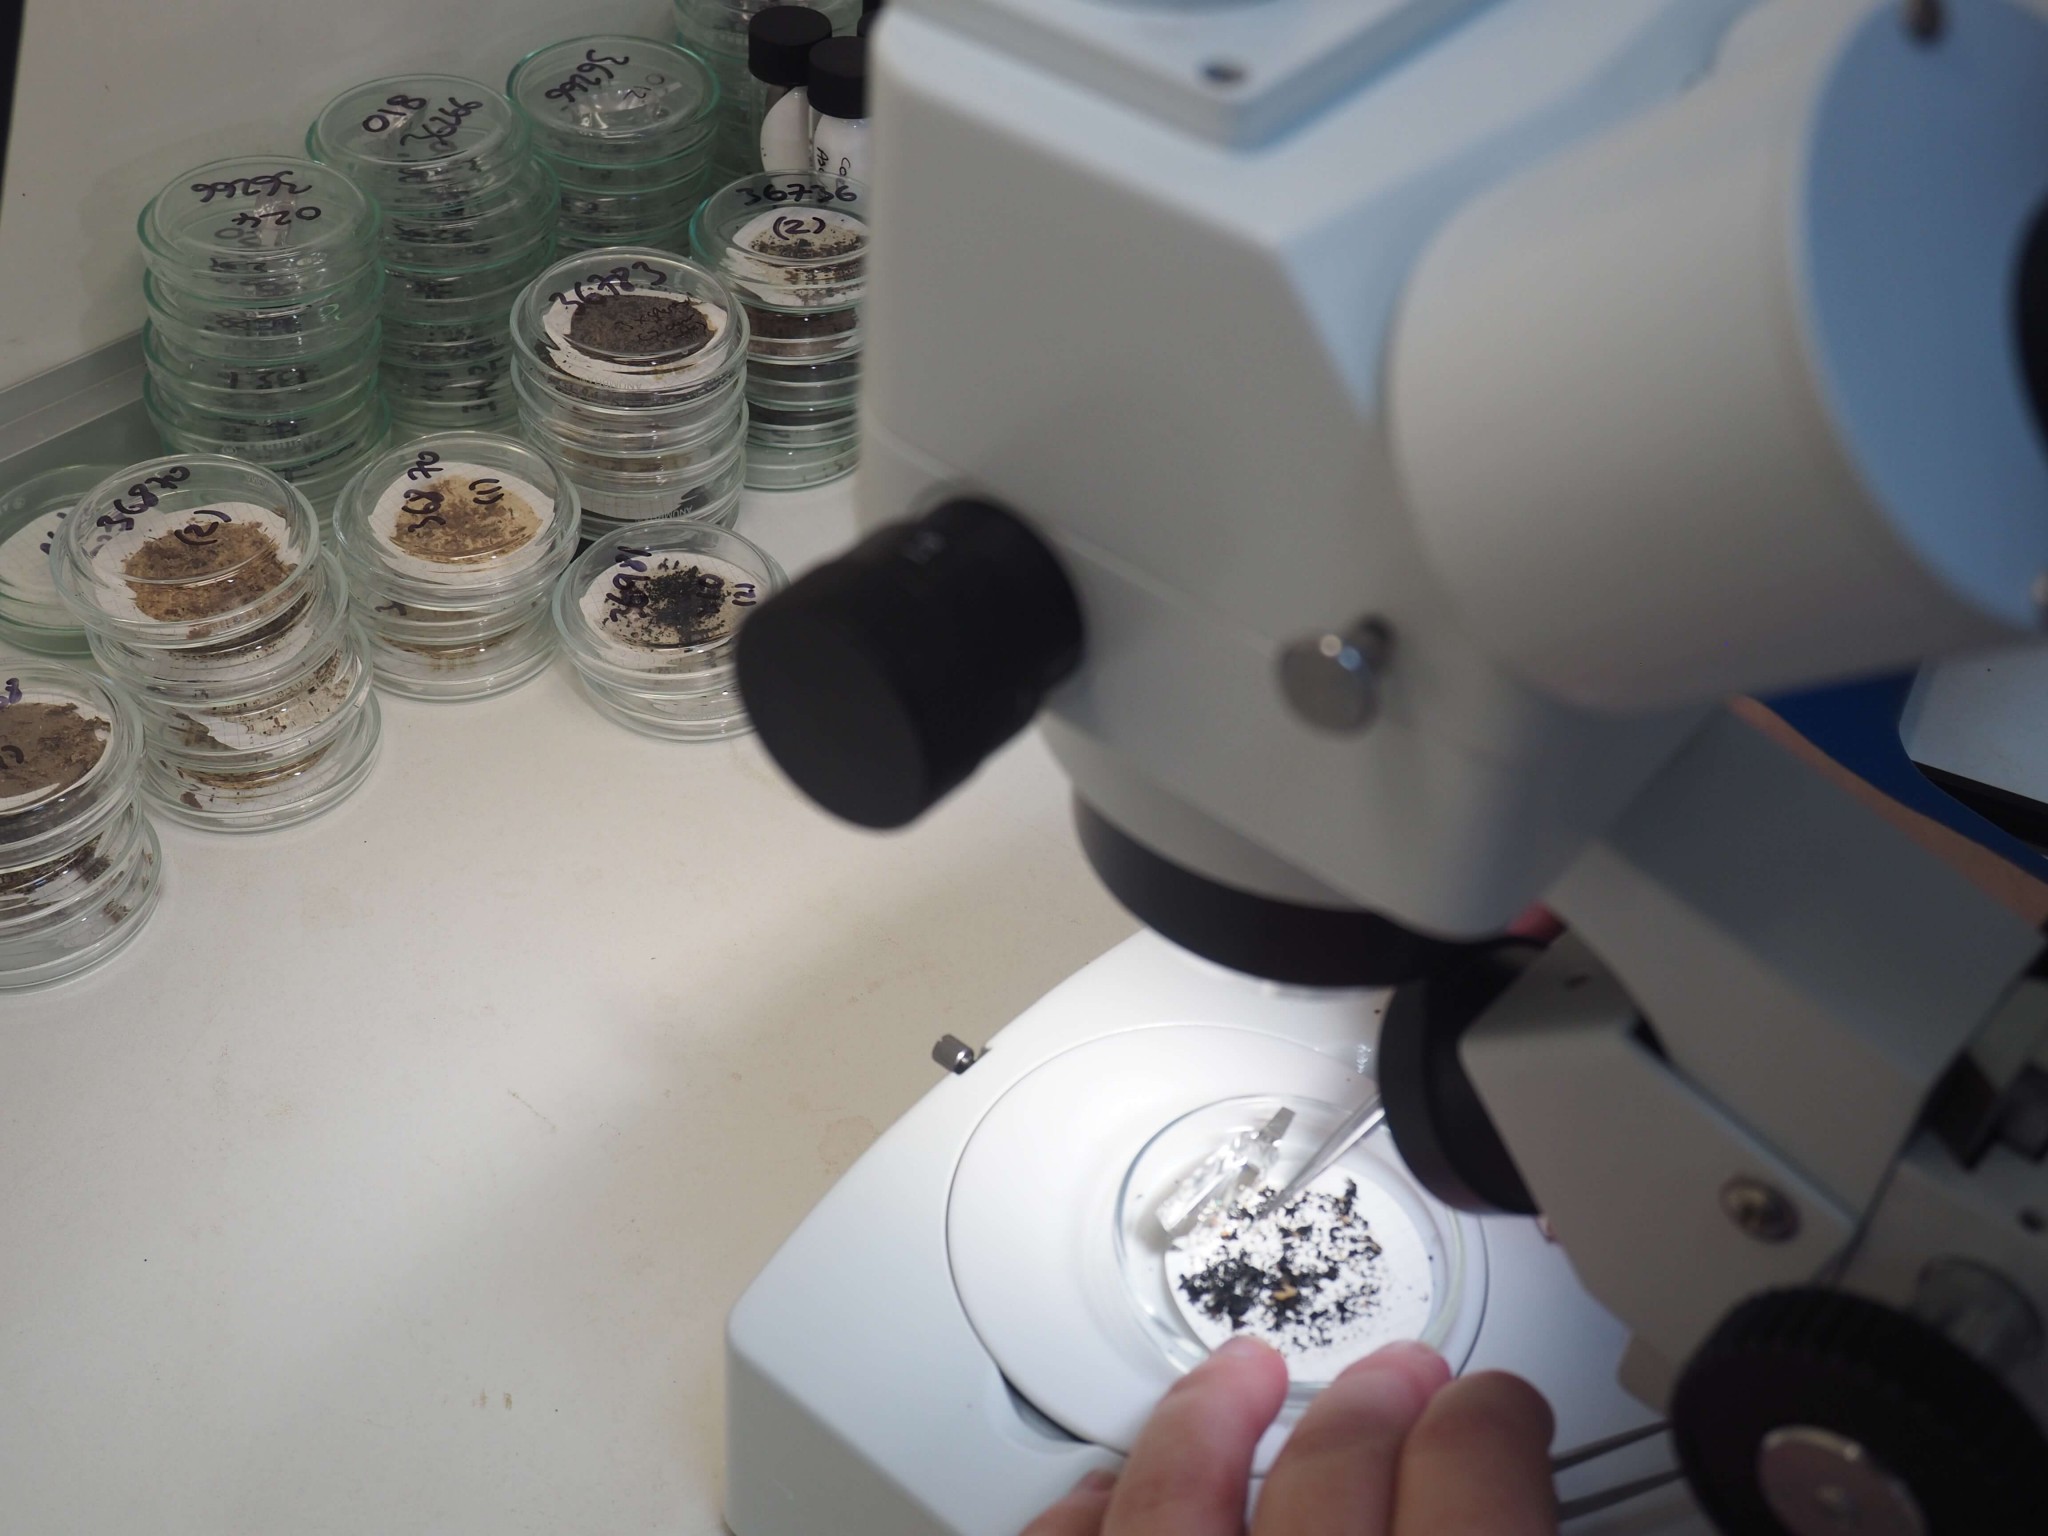 microplastic analysis microscope